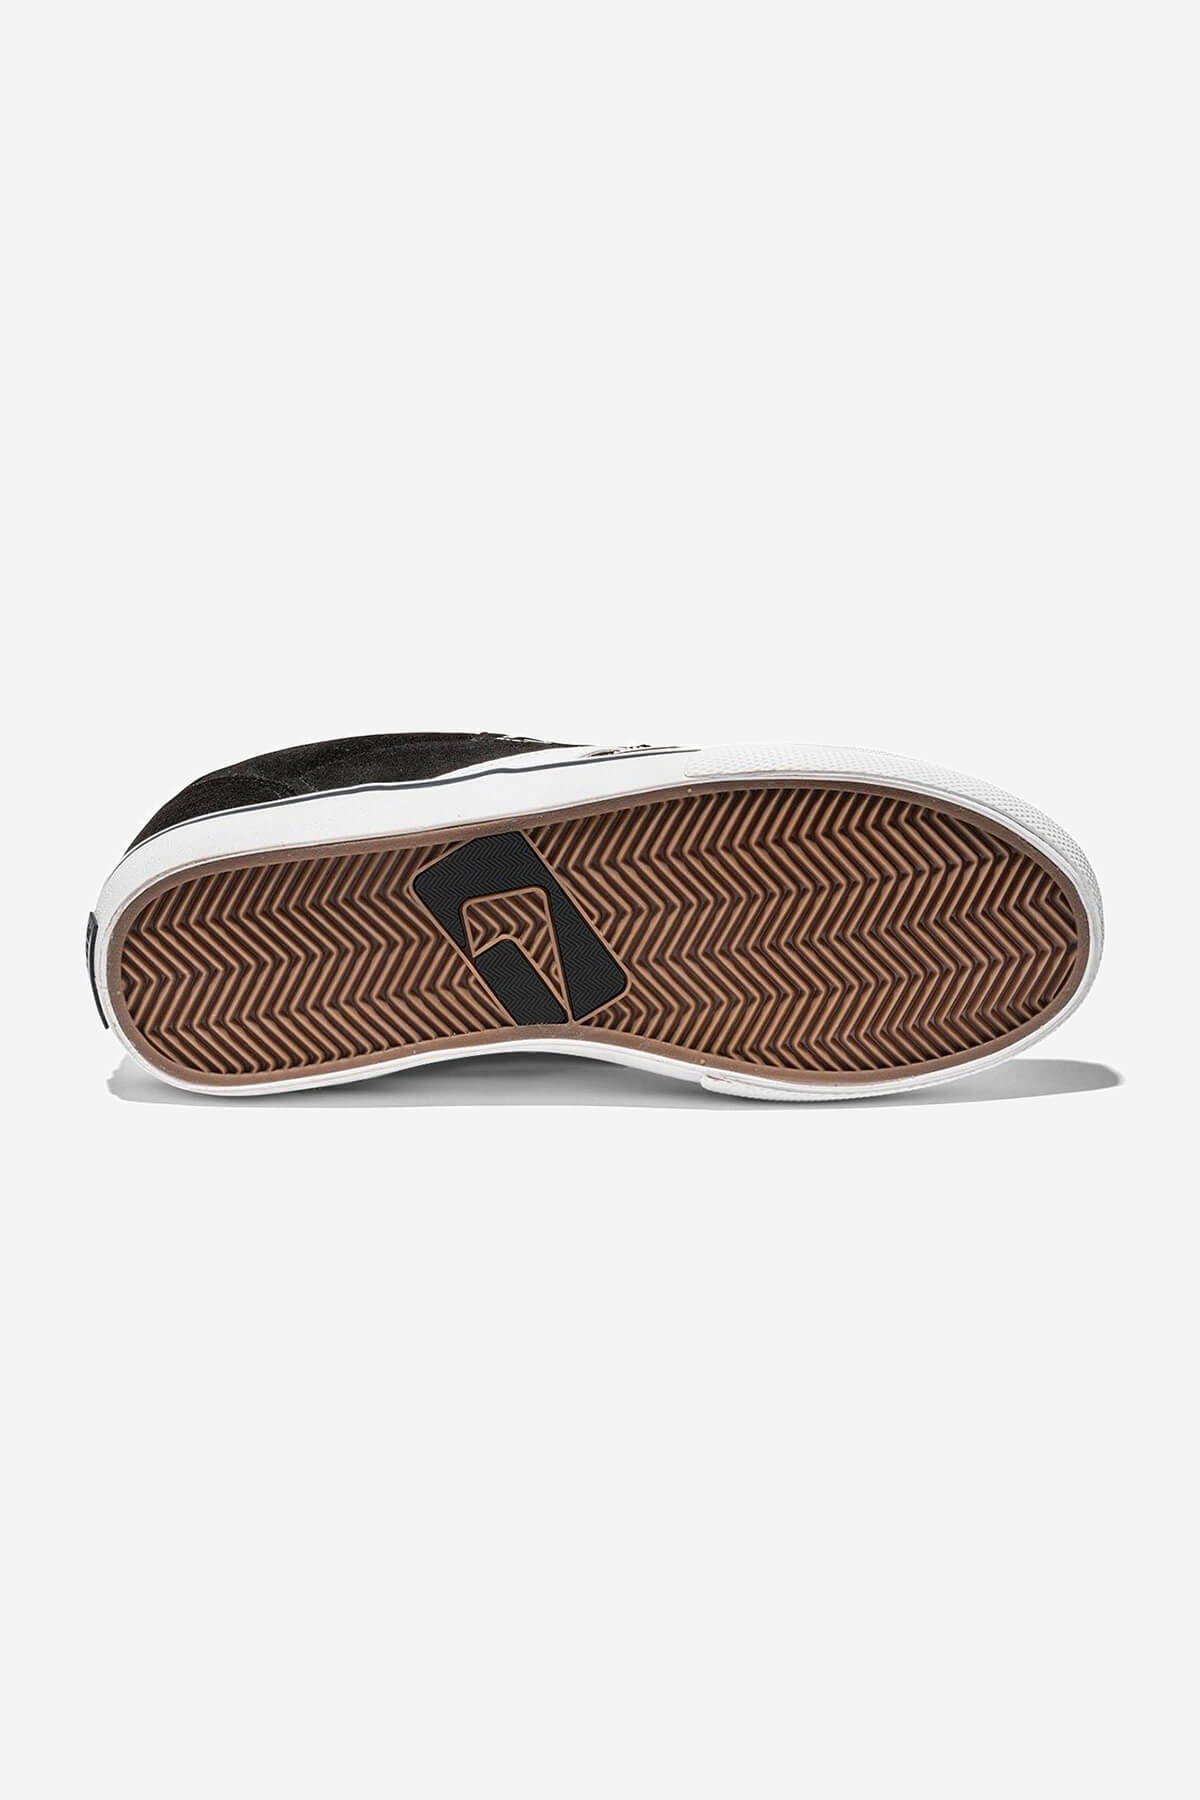 Bis-2 Black/White skateboard scarpe